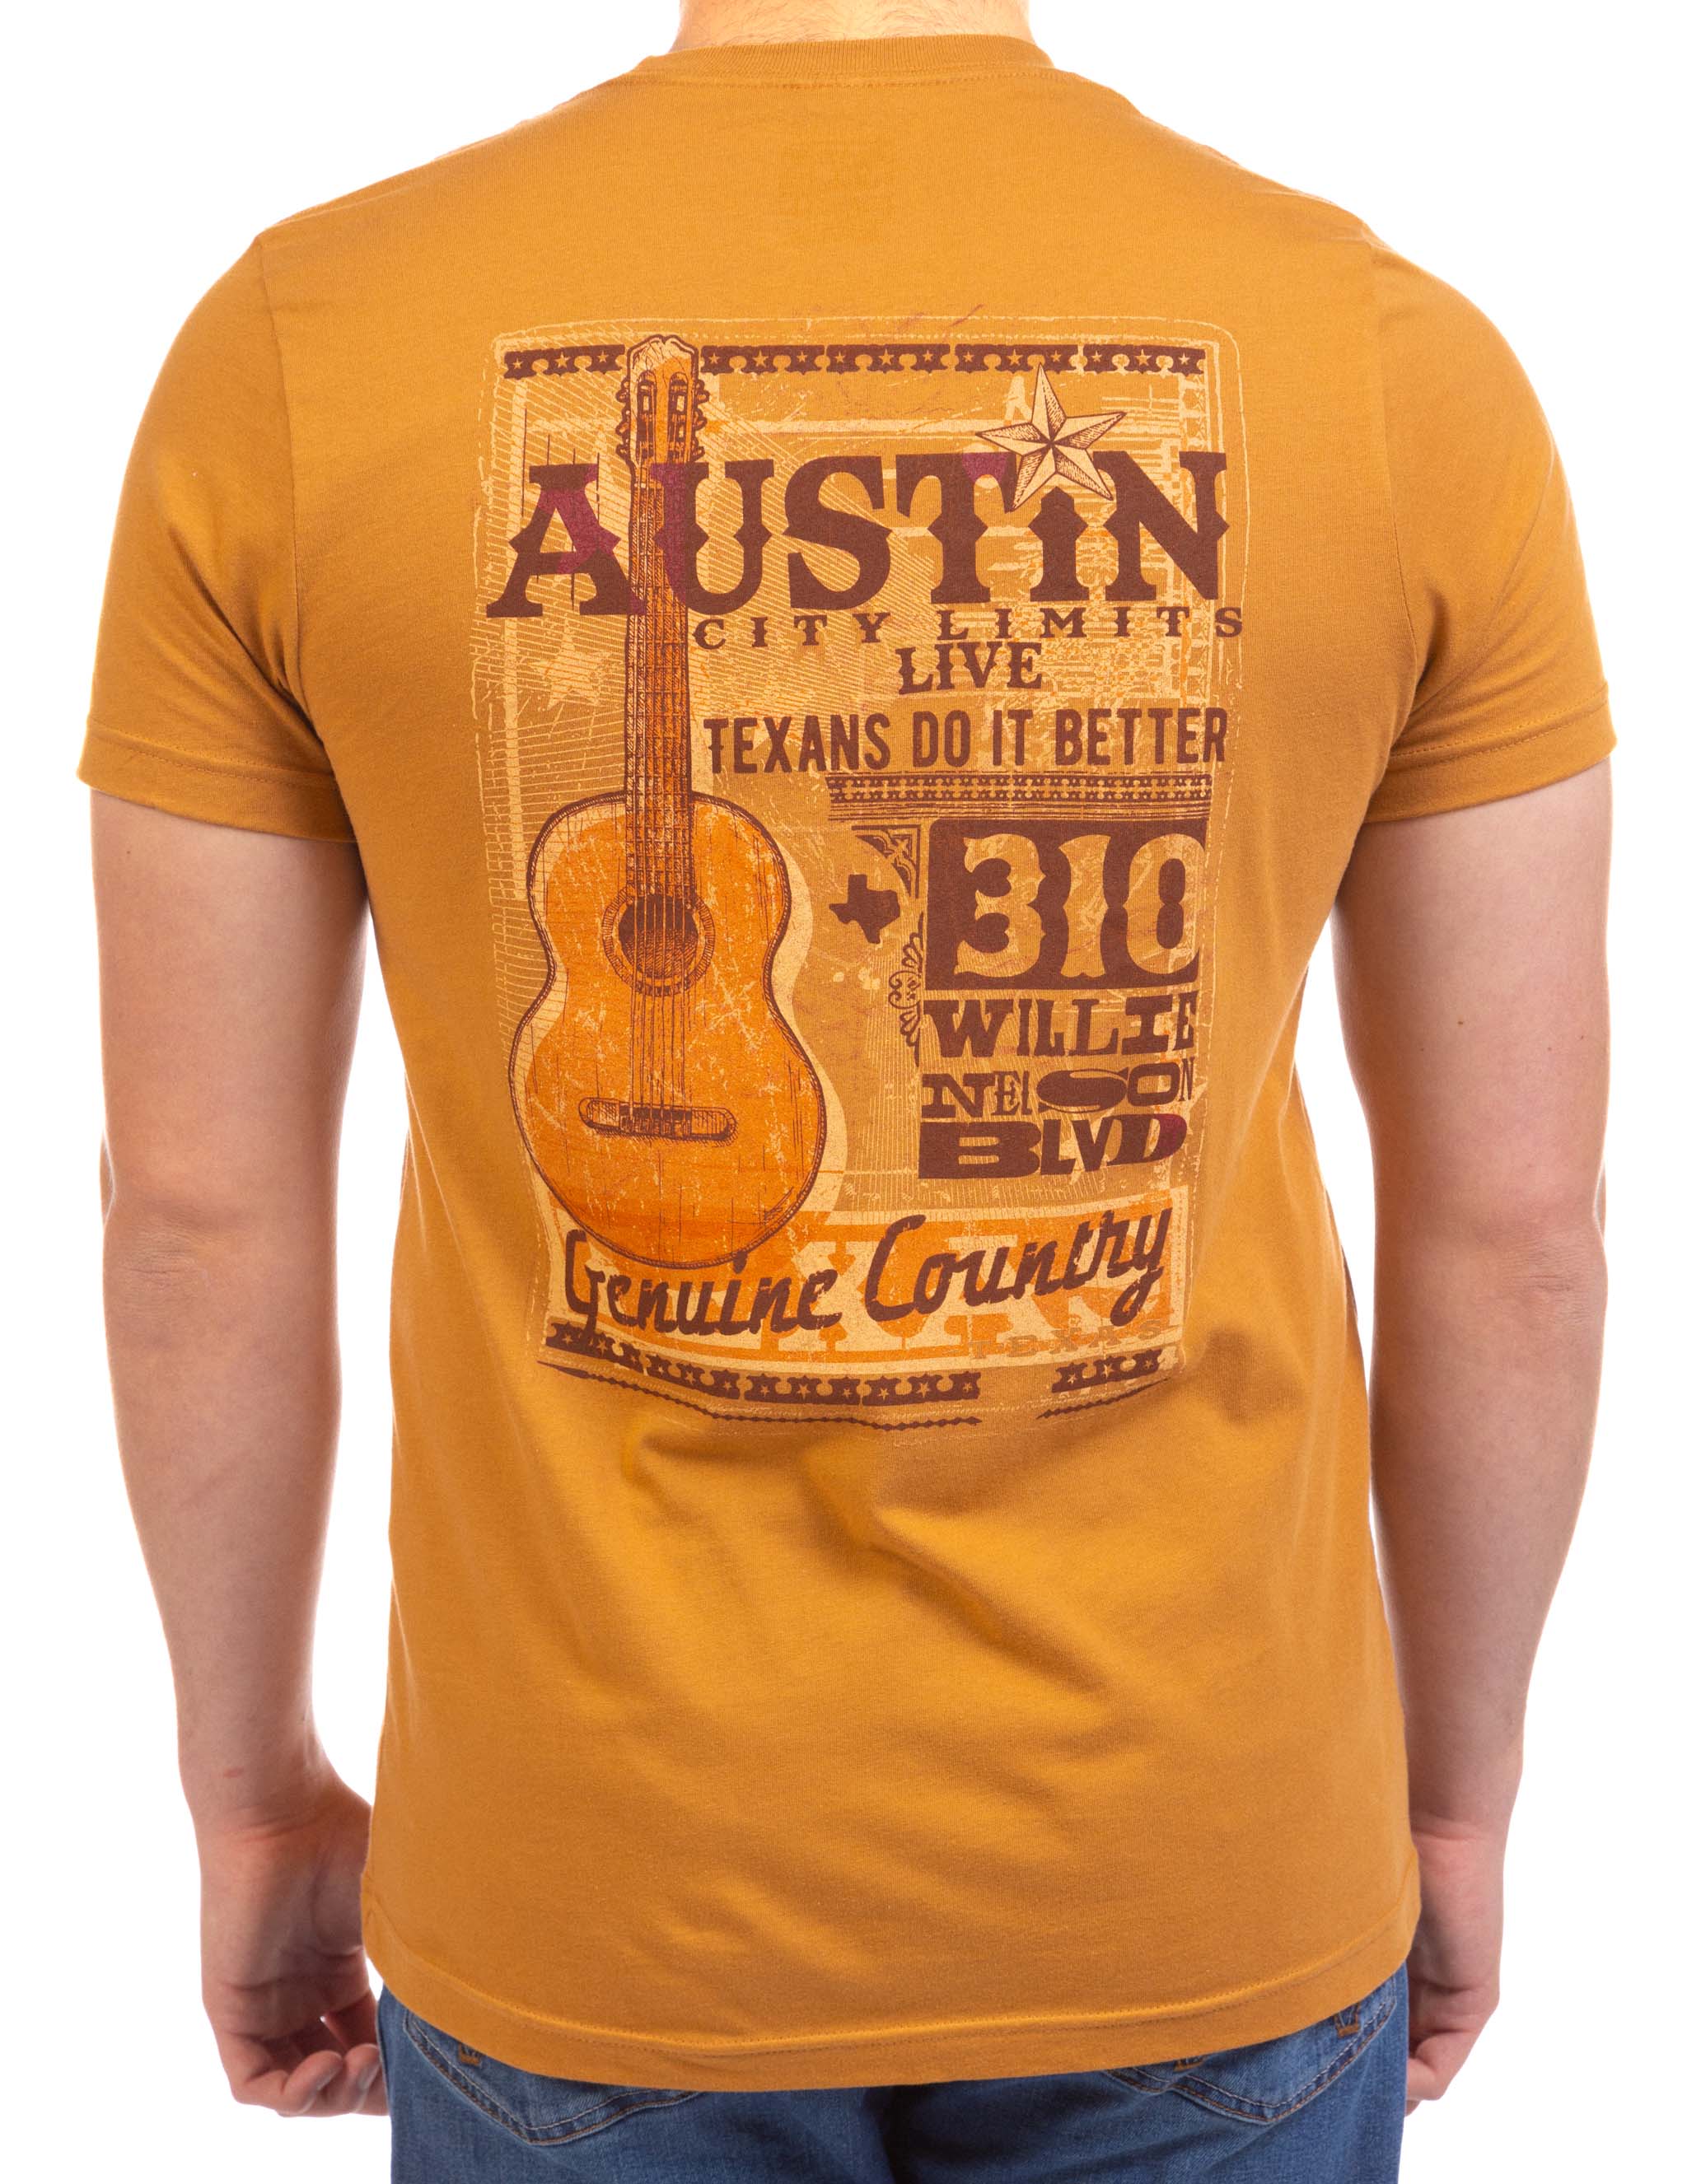 Lucky Brand Nashville Martin Guitar Short-Sleeve Graphic T-Shirt